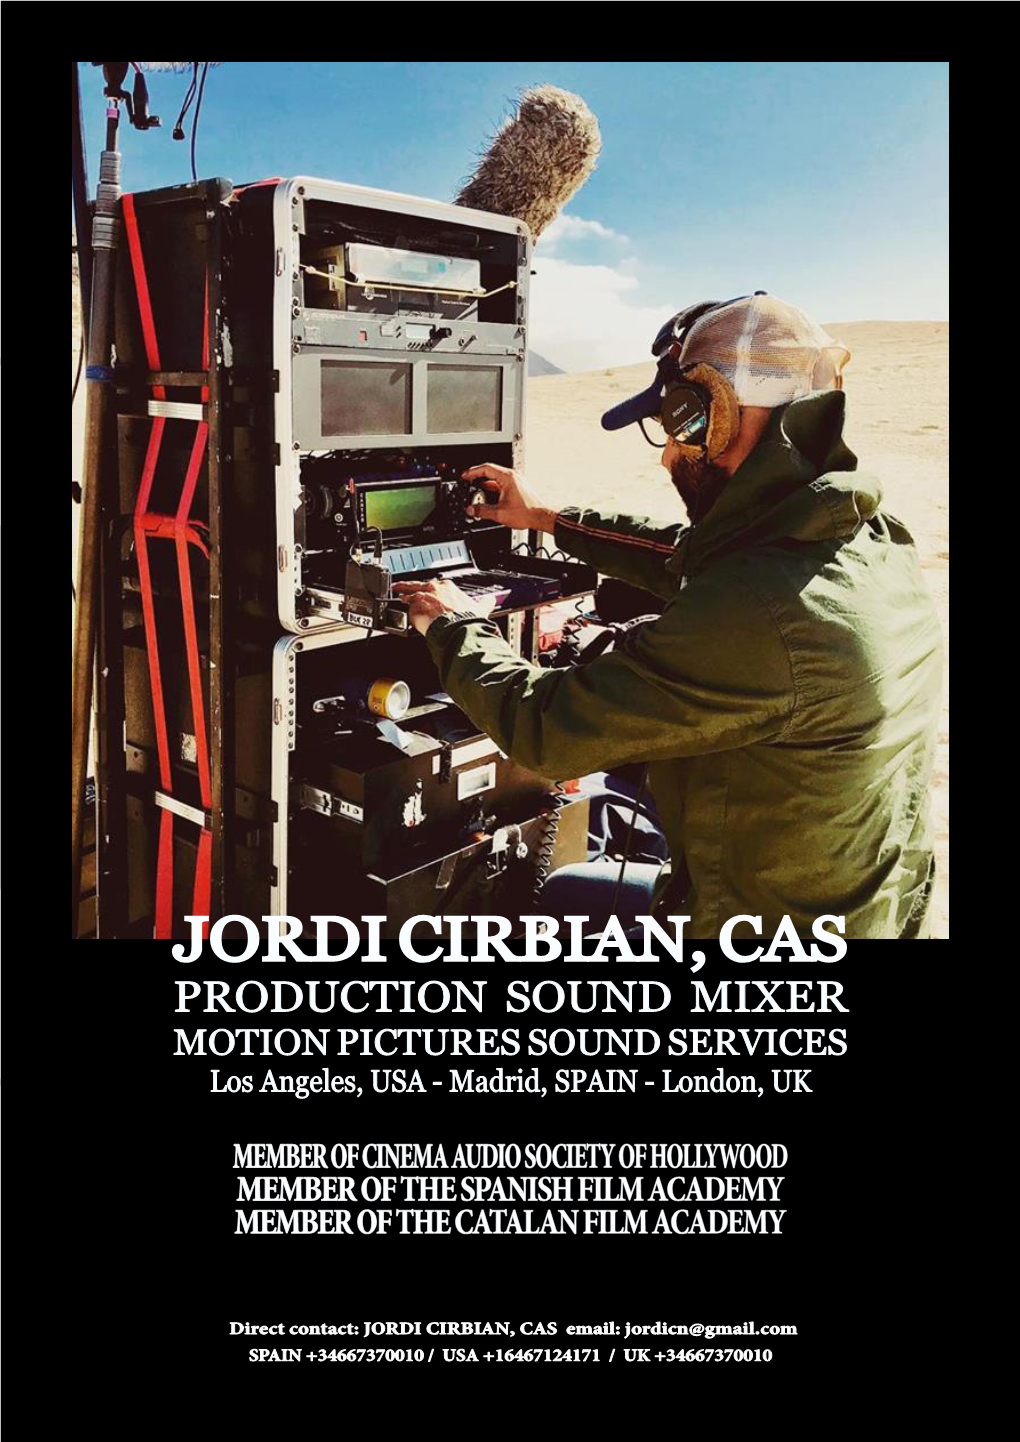 JORDI CIRBIAN, CAS PRODUCTION SOUND MIXER MOTION PICTURES SOUND SERVICES Los Angeles, USA - Madrid, SPAIN - London, UK